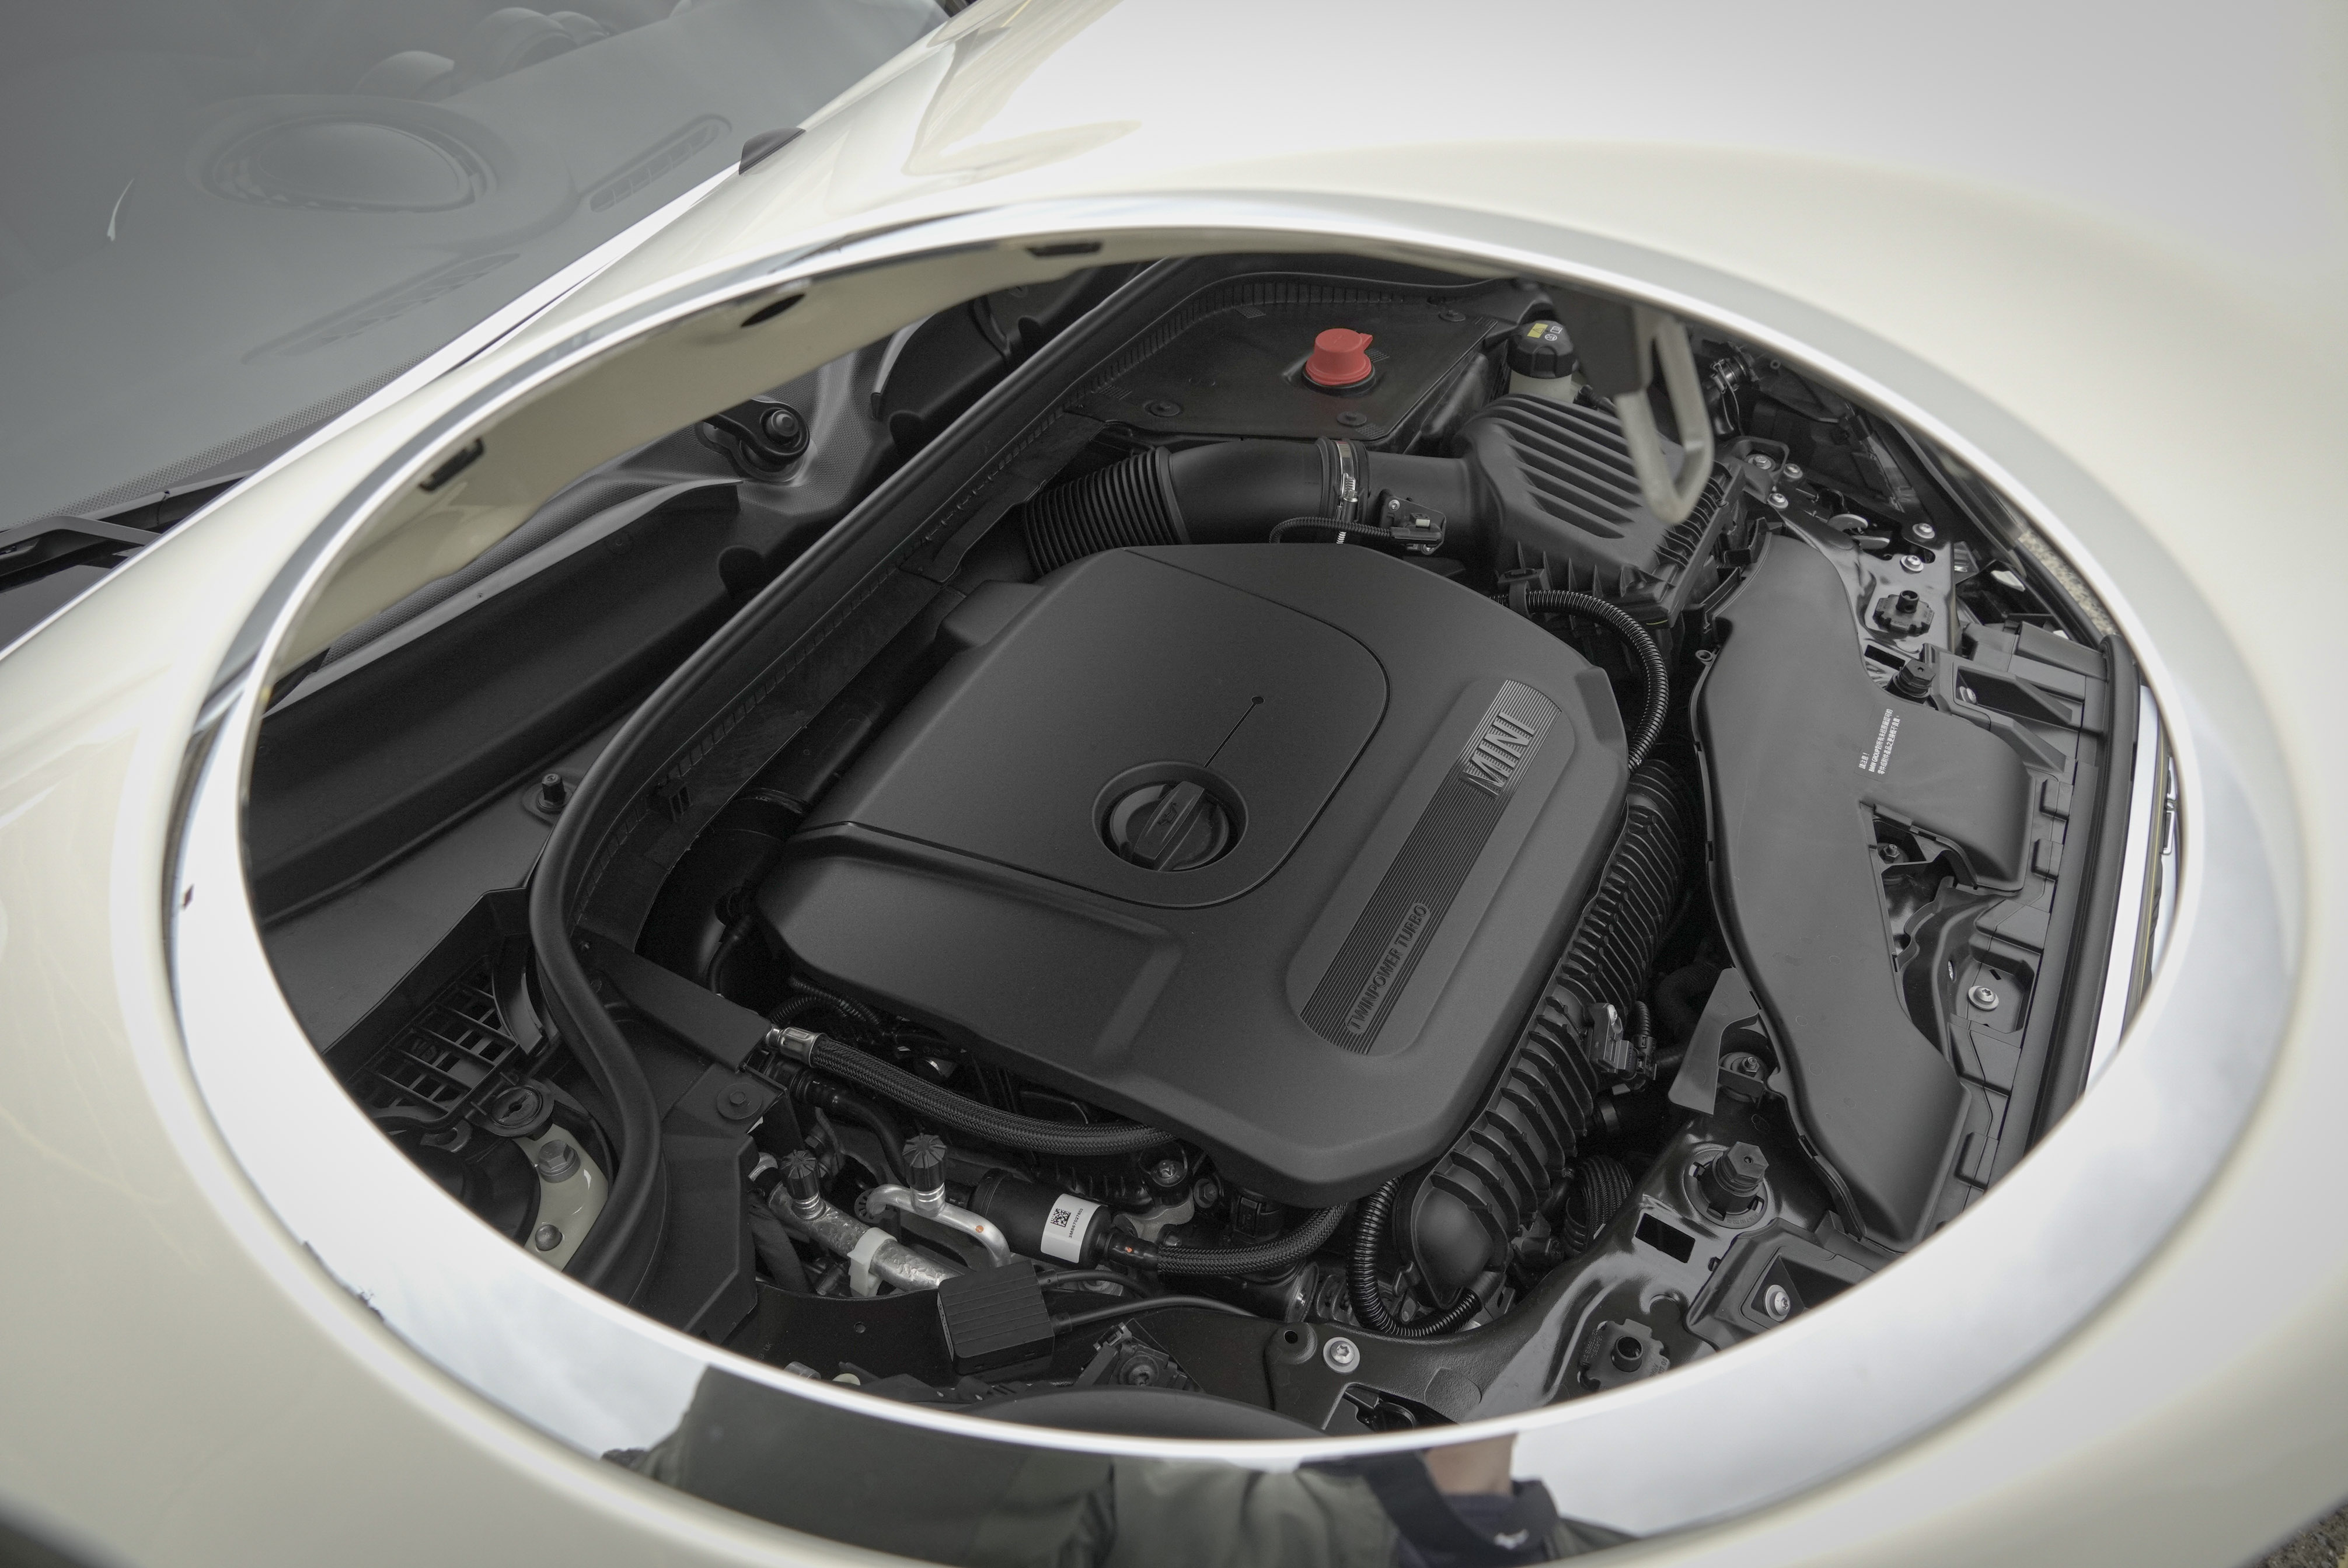 Cooper S 的 2.0 升 TwinPower Turbo 四缸渦輪引擎可帶來 192 匹馬力、280 Nm 扭力，0-100 km/h 加速可於 6.8 秒內完成。